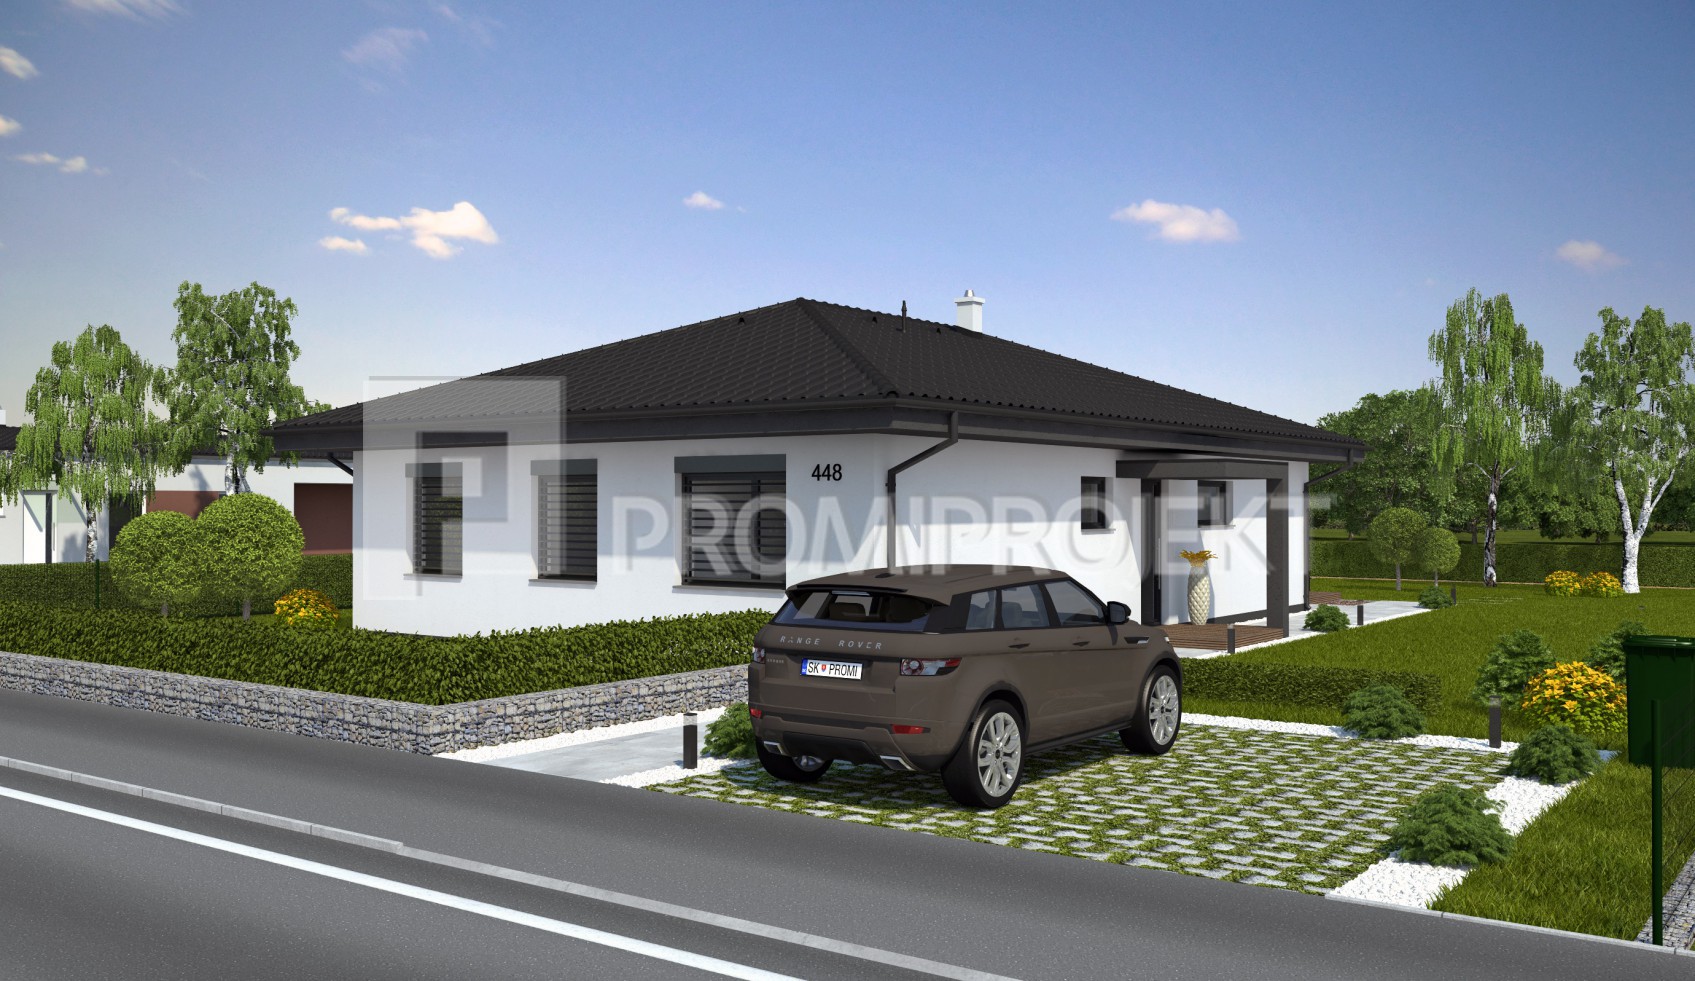 Moderné projekty domov / Projekty domov  Laguna 448 